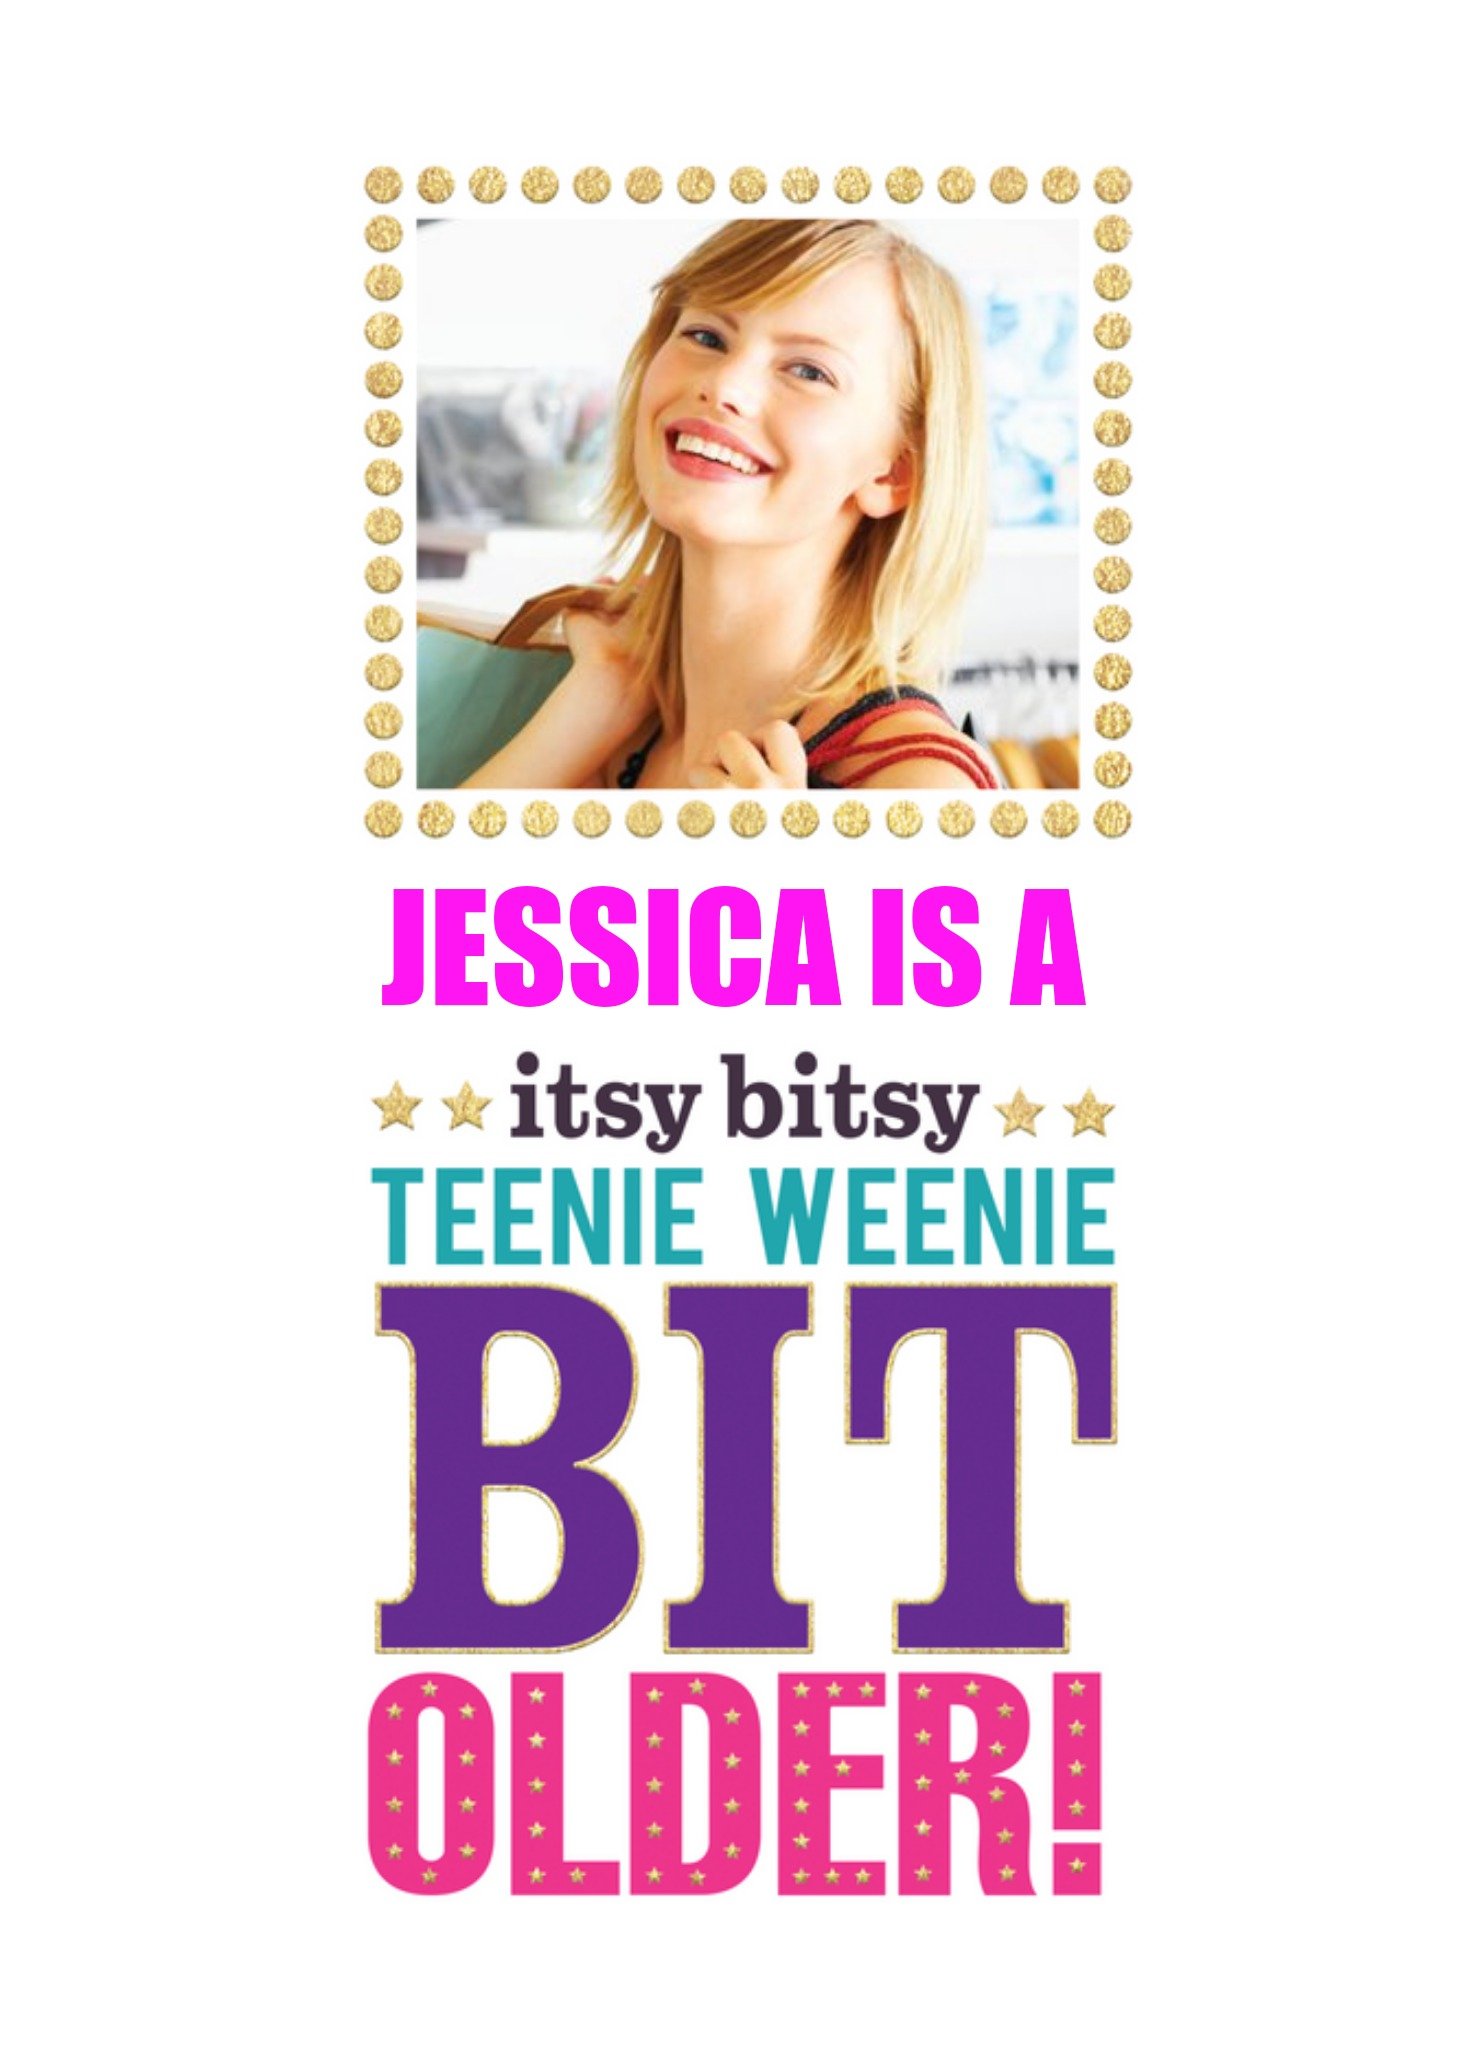 Moonpig Itsy Bitsy Teenie Weenie Bit Older Personalised Photo Upload Birthday Card, Large